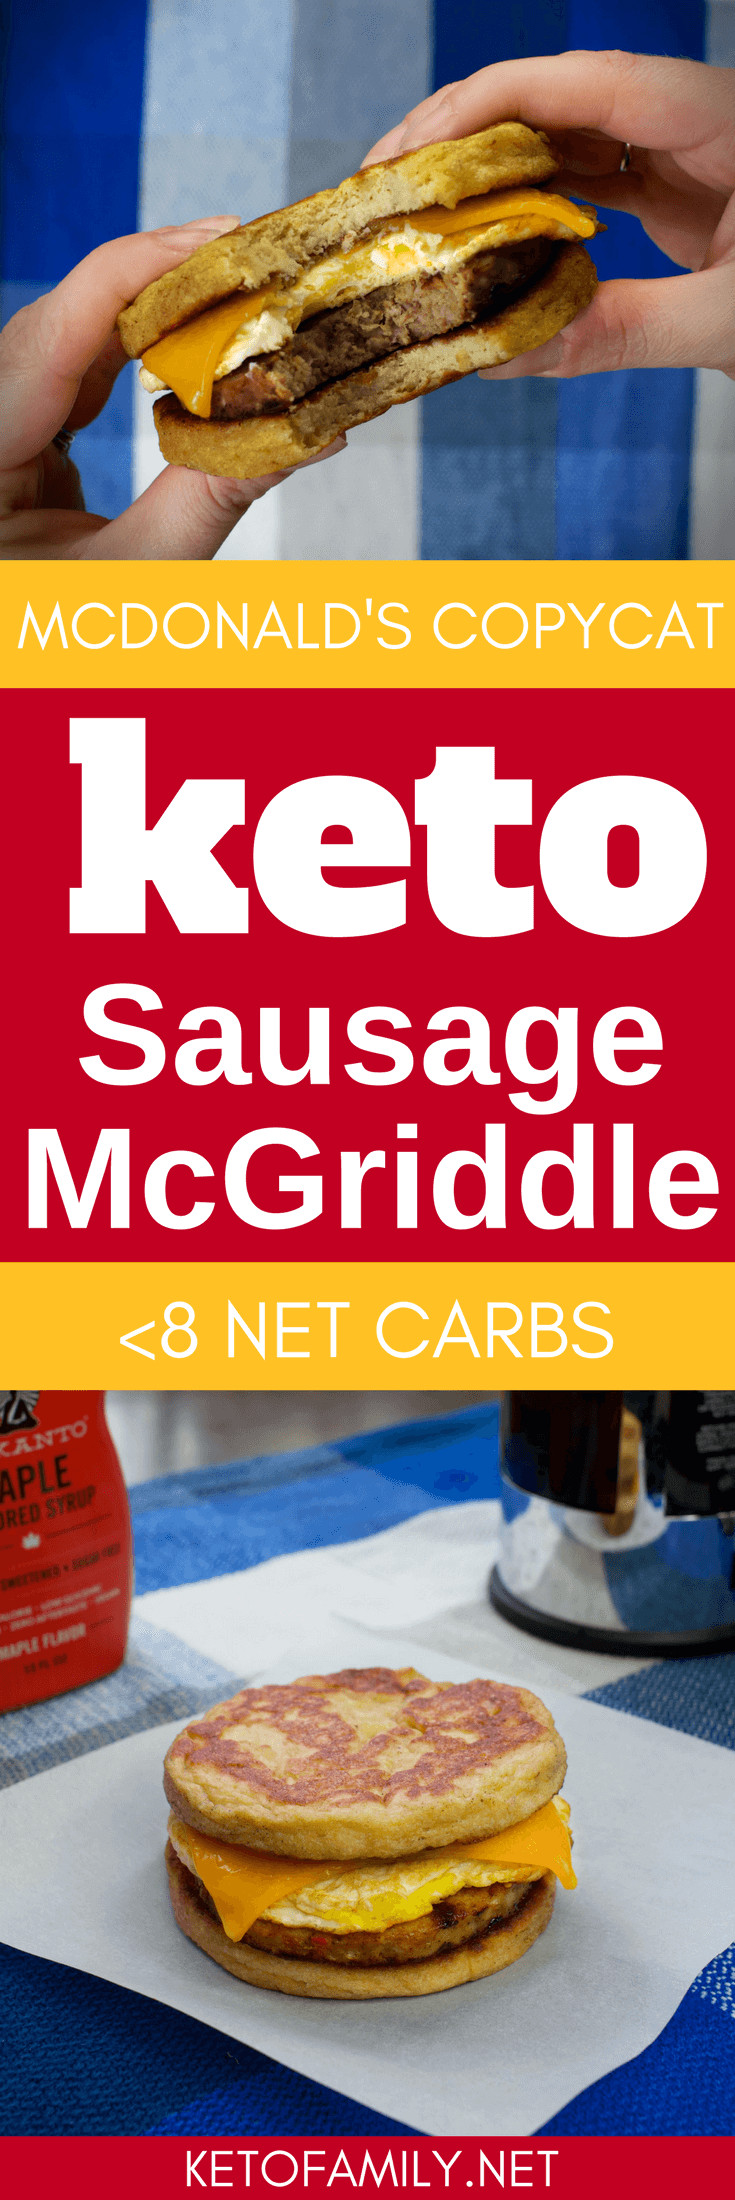 Mcdonalds Keto Breakfast
 Keto Sausage McGriddles Low carb McDonald’s breakfast